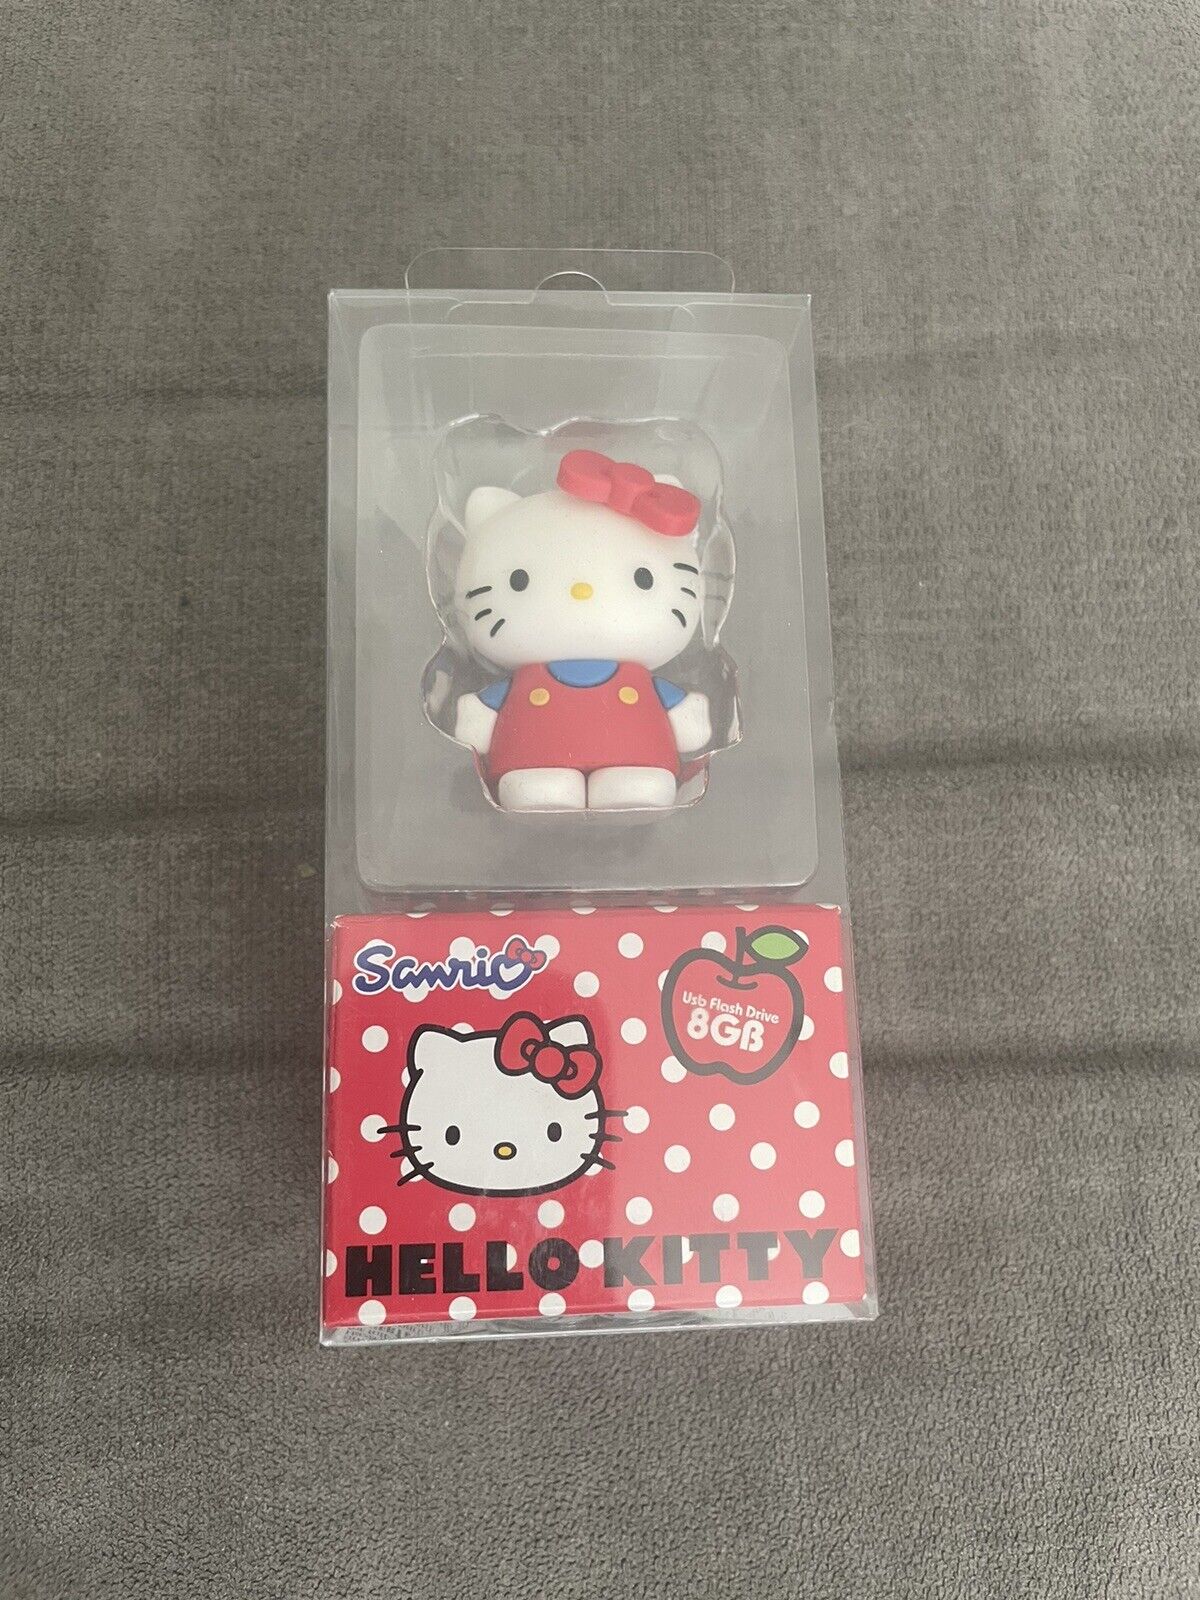 Hello Kitty Classic 3D Design USB Flash Drive 8GB - Sanrio NEW